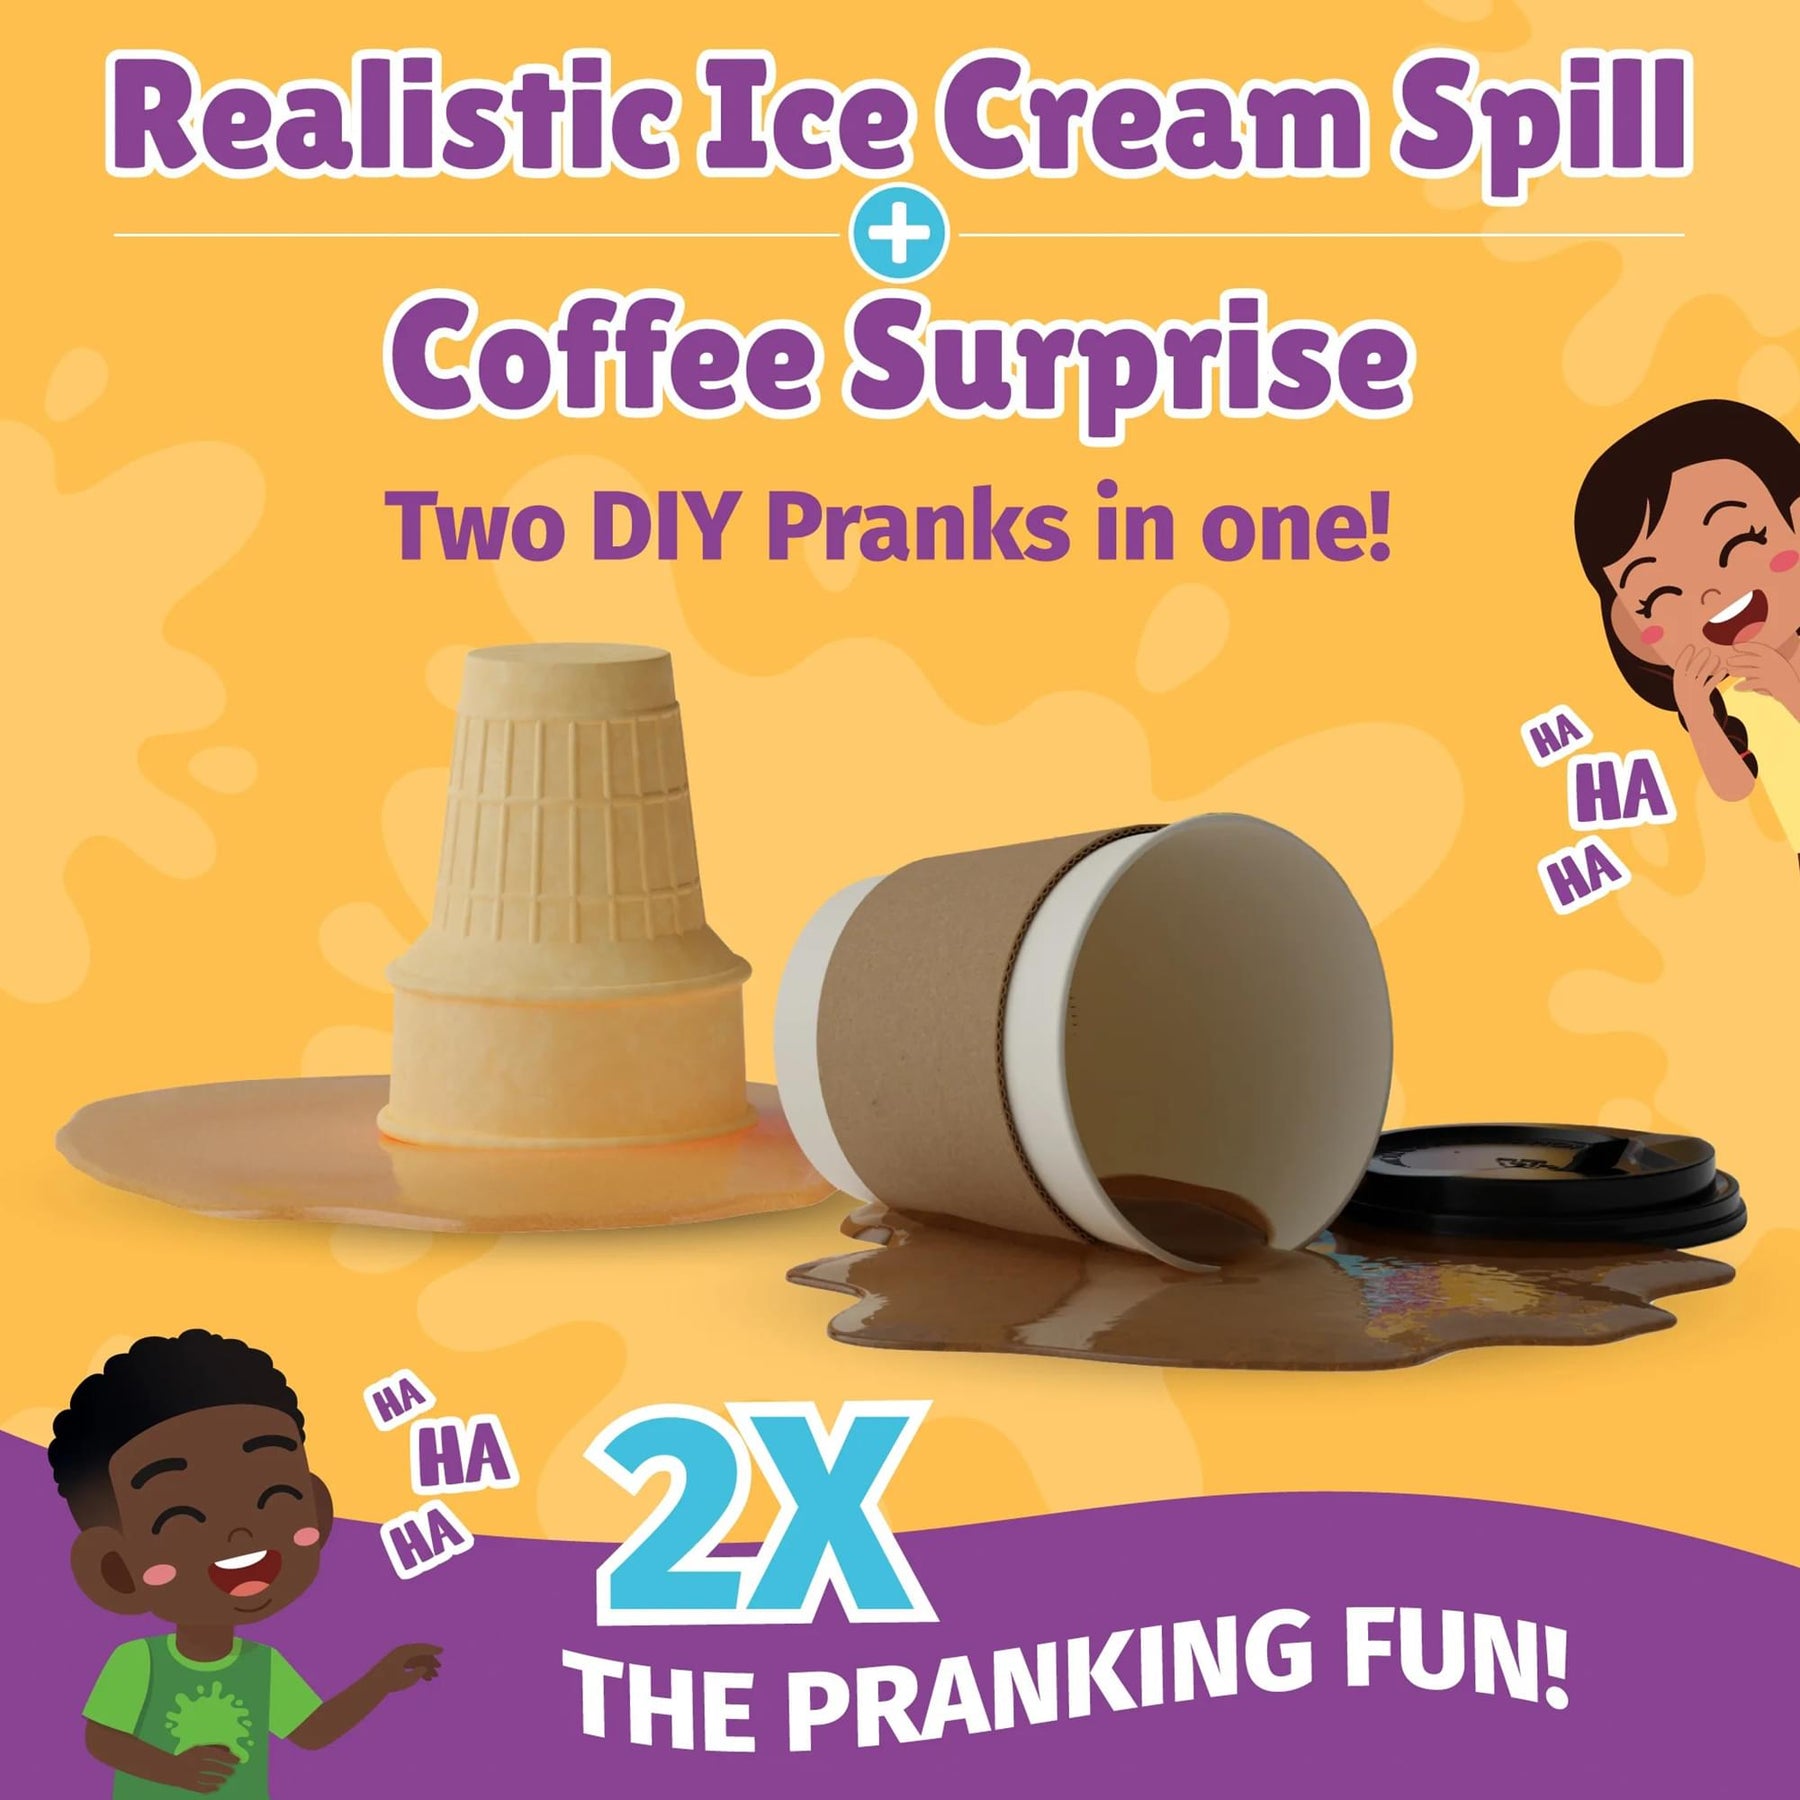 WatchMePrank DIY Prank Kit | Coffee Cup & Ice Cream Cone